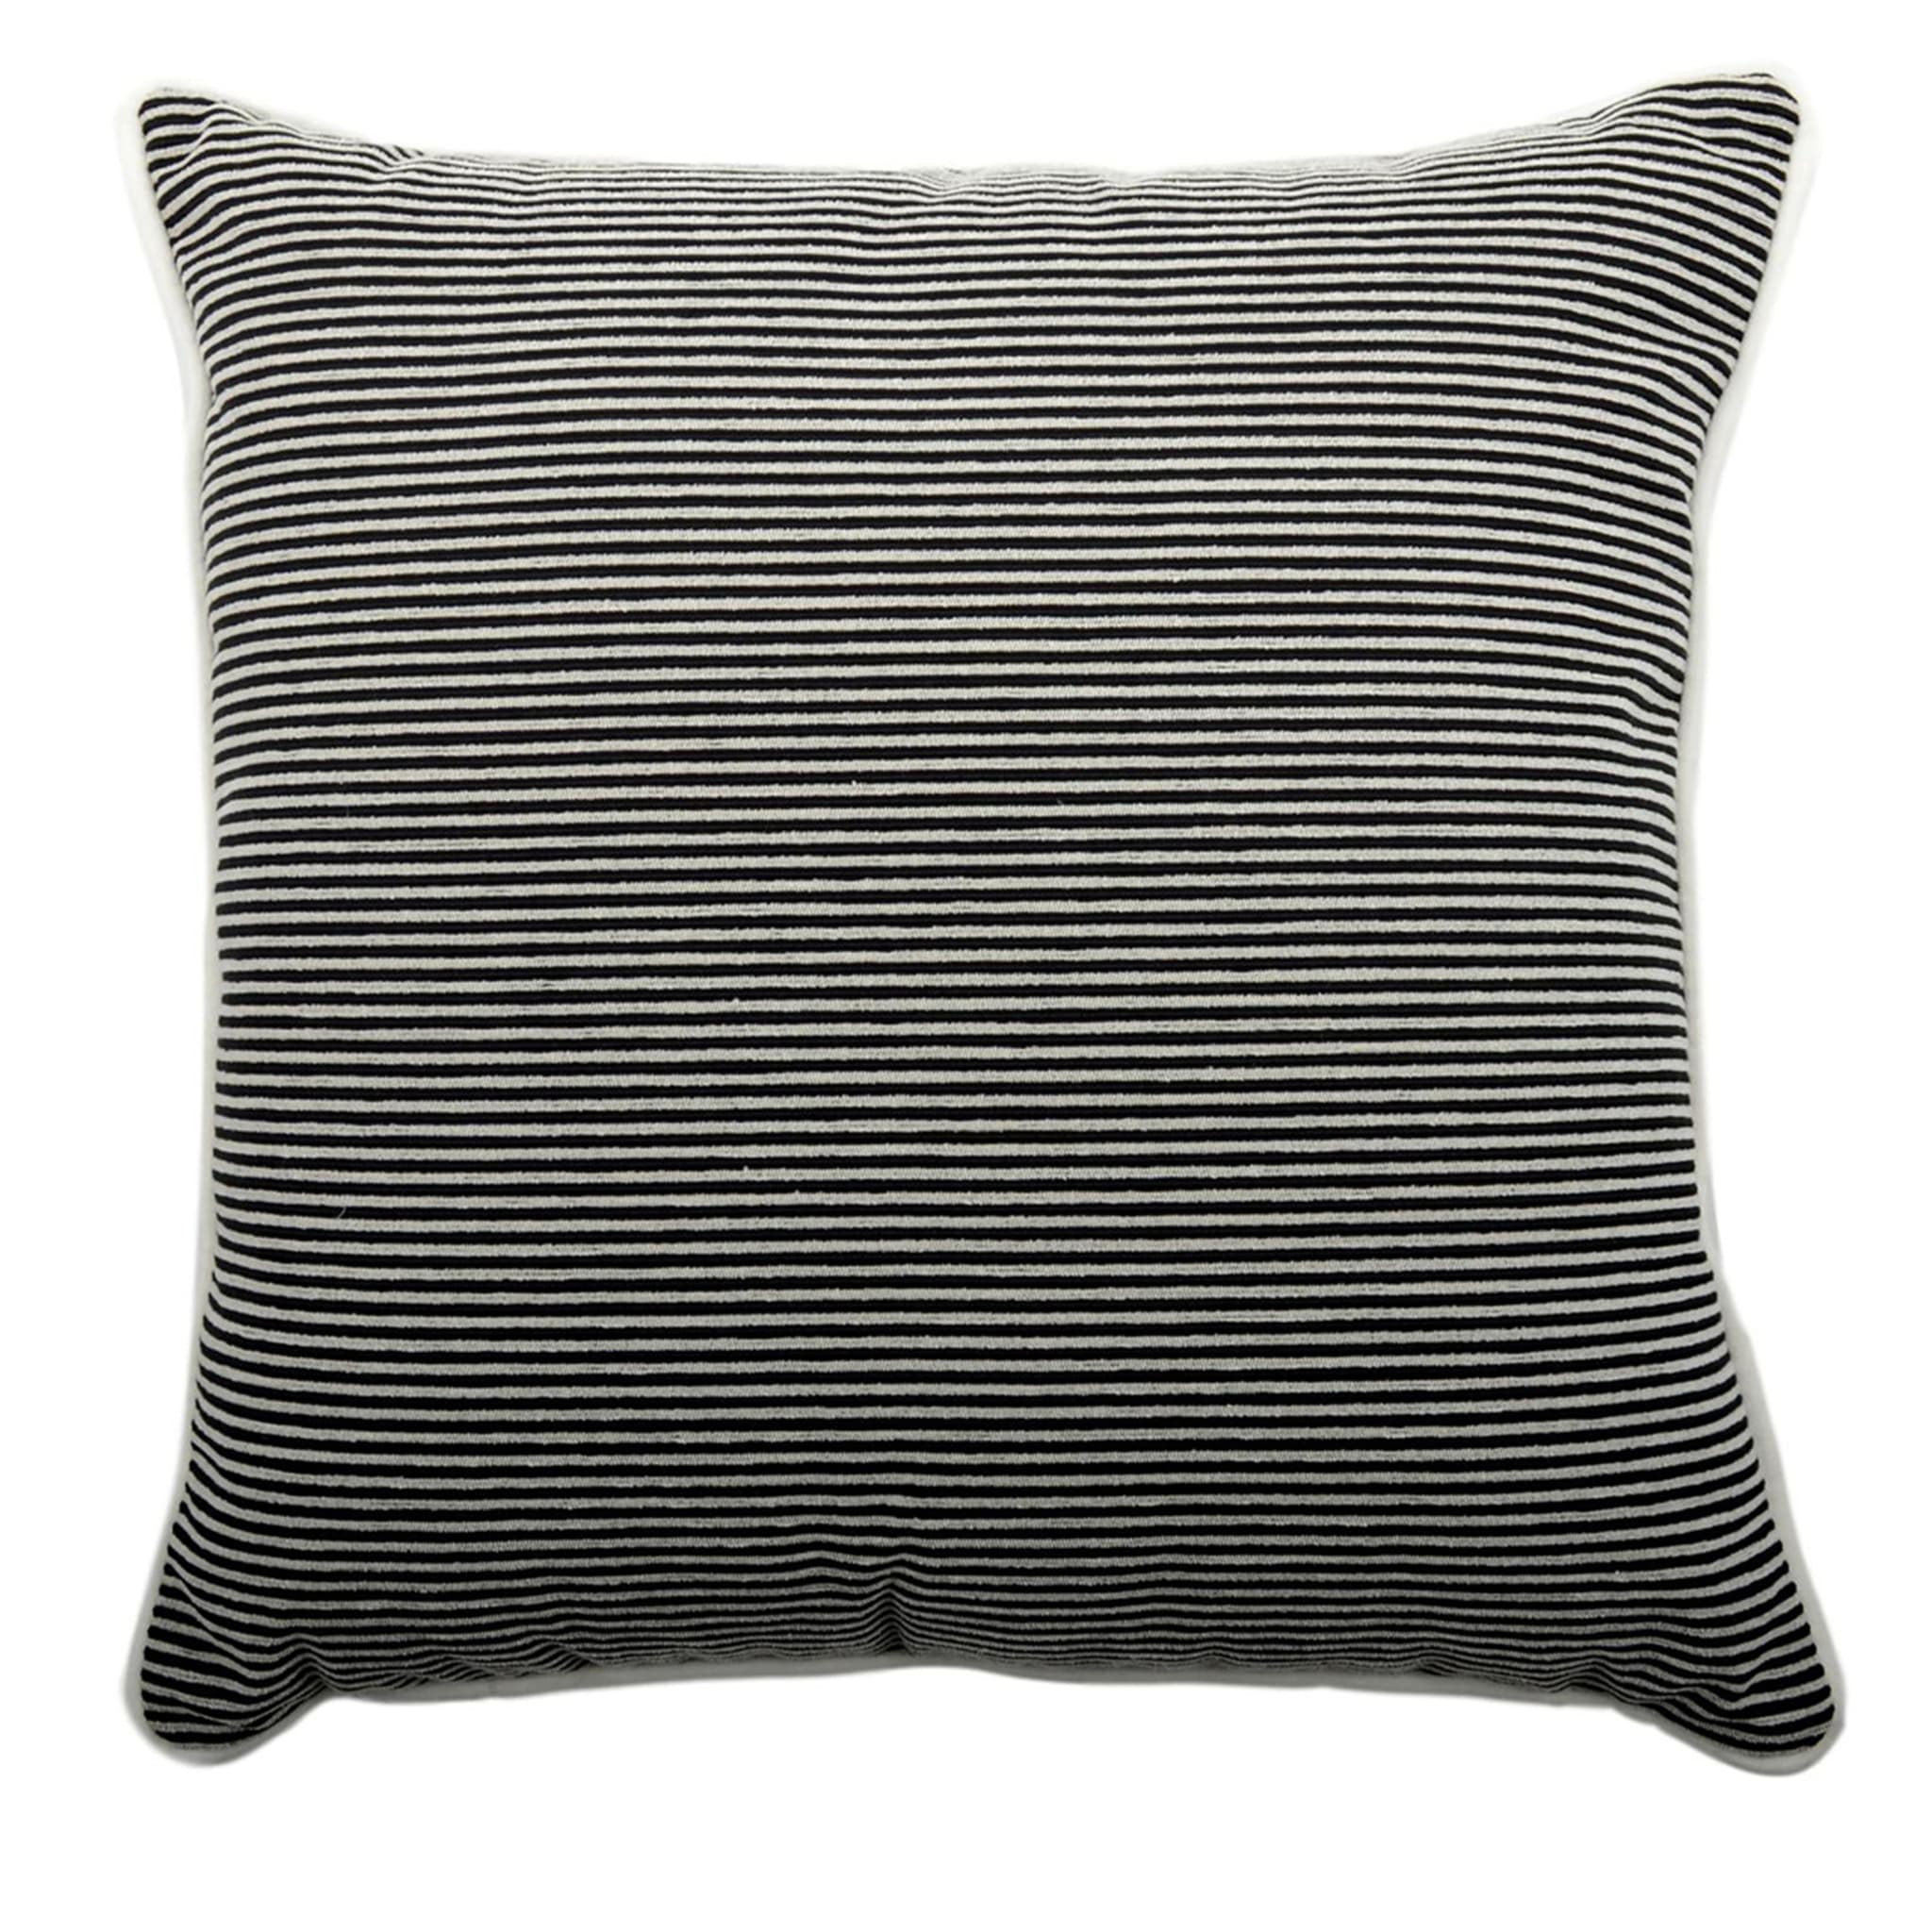 Black and White Carrè Cushion in striped jacquard fabric - Main view